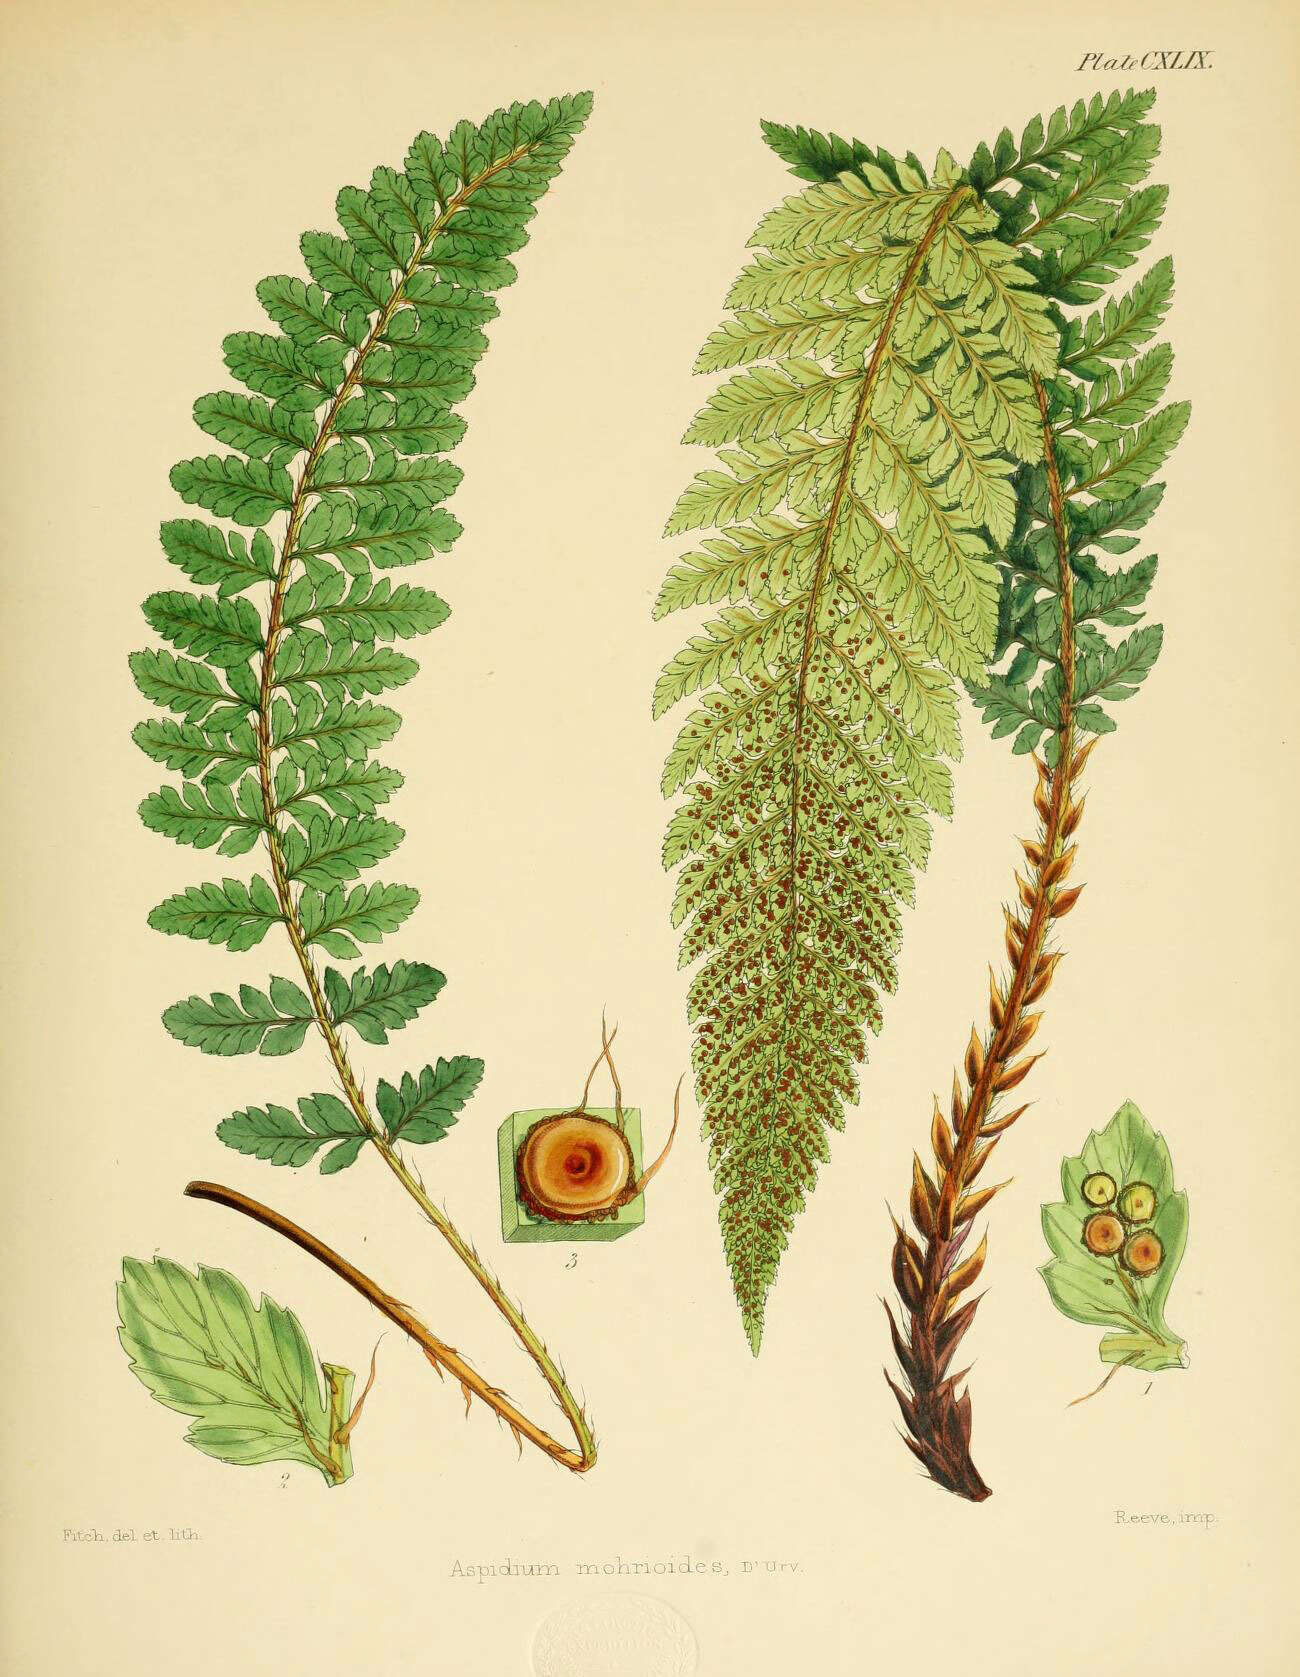 Polystichum mohrioides (Bory) K. C. Presl resmi